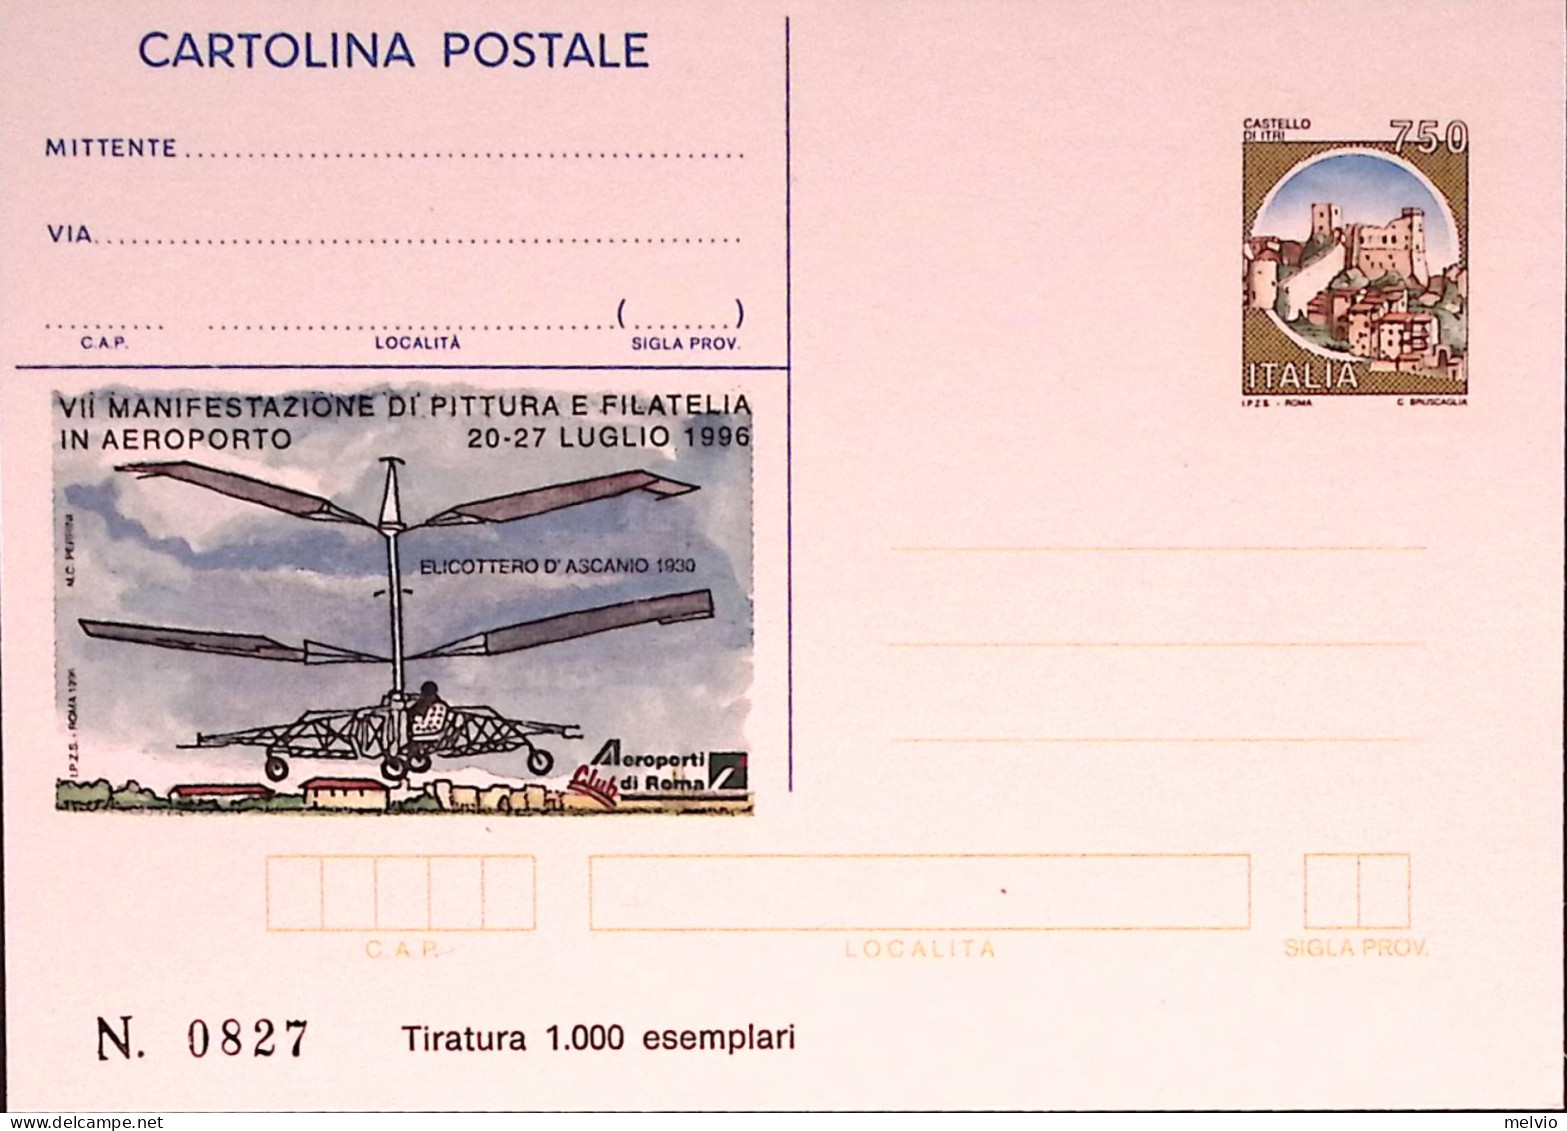 1996-CLUB AEROPORTI ROMA Cartolina Postale IPZS Lire 750 Nuova - Stamped Stationery